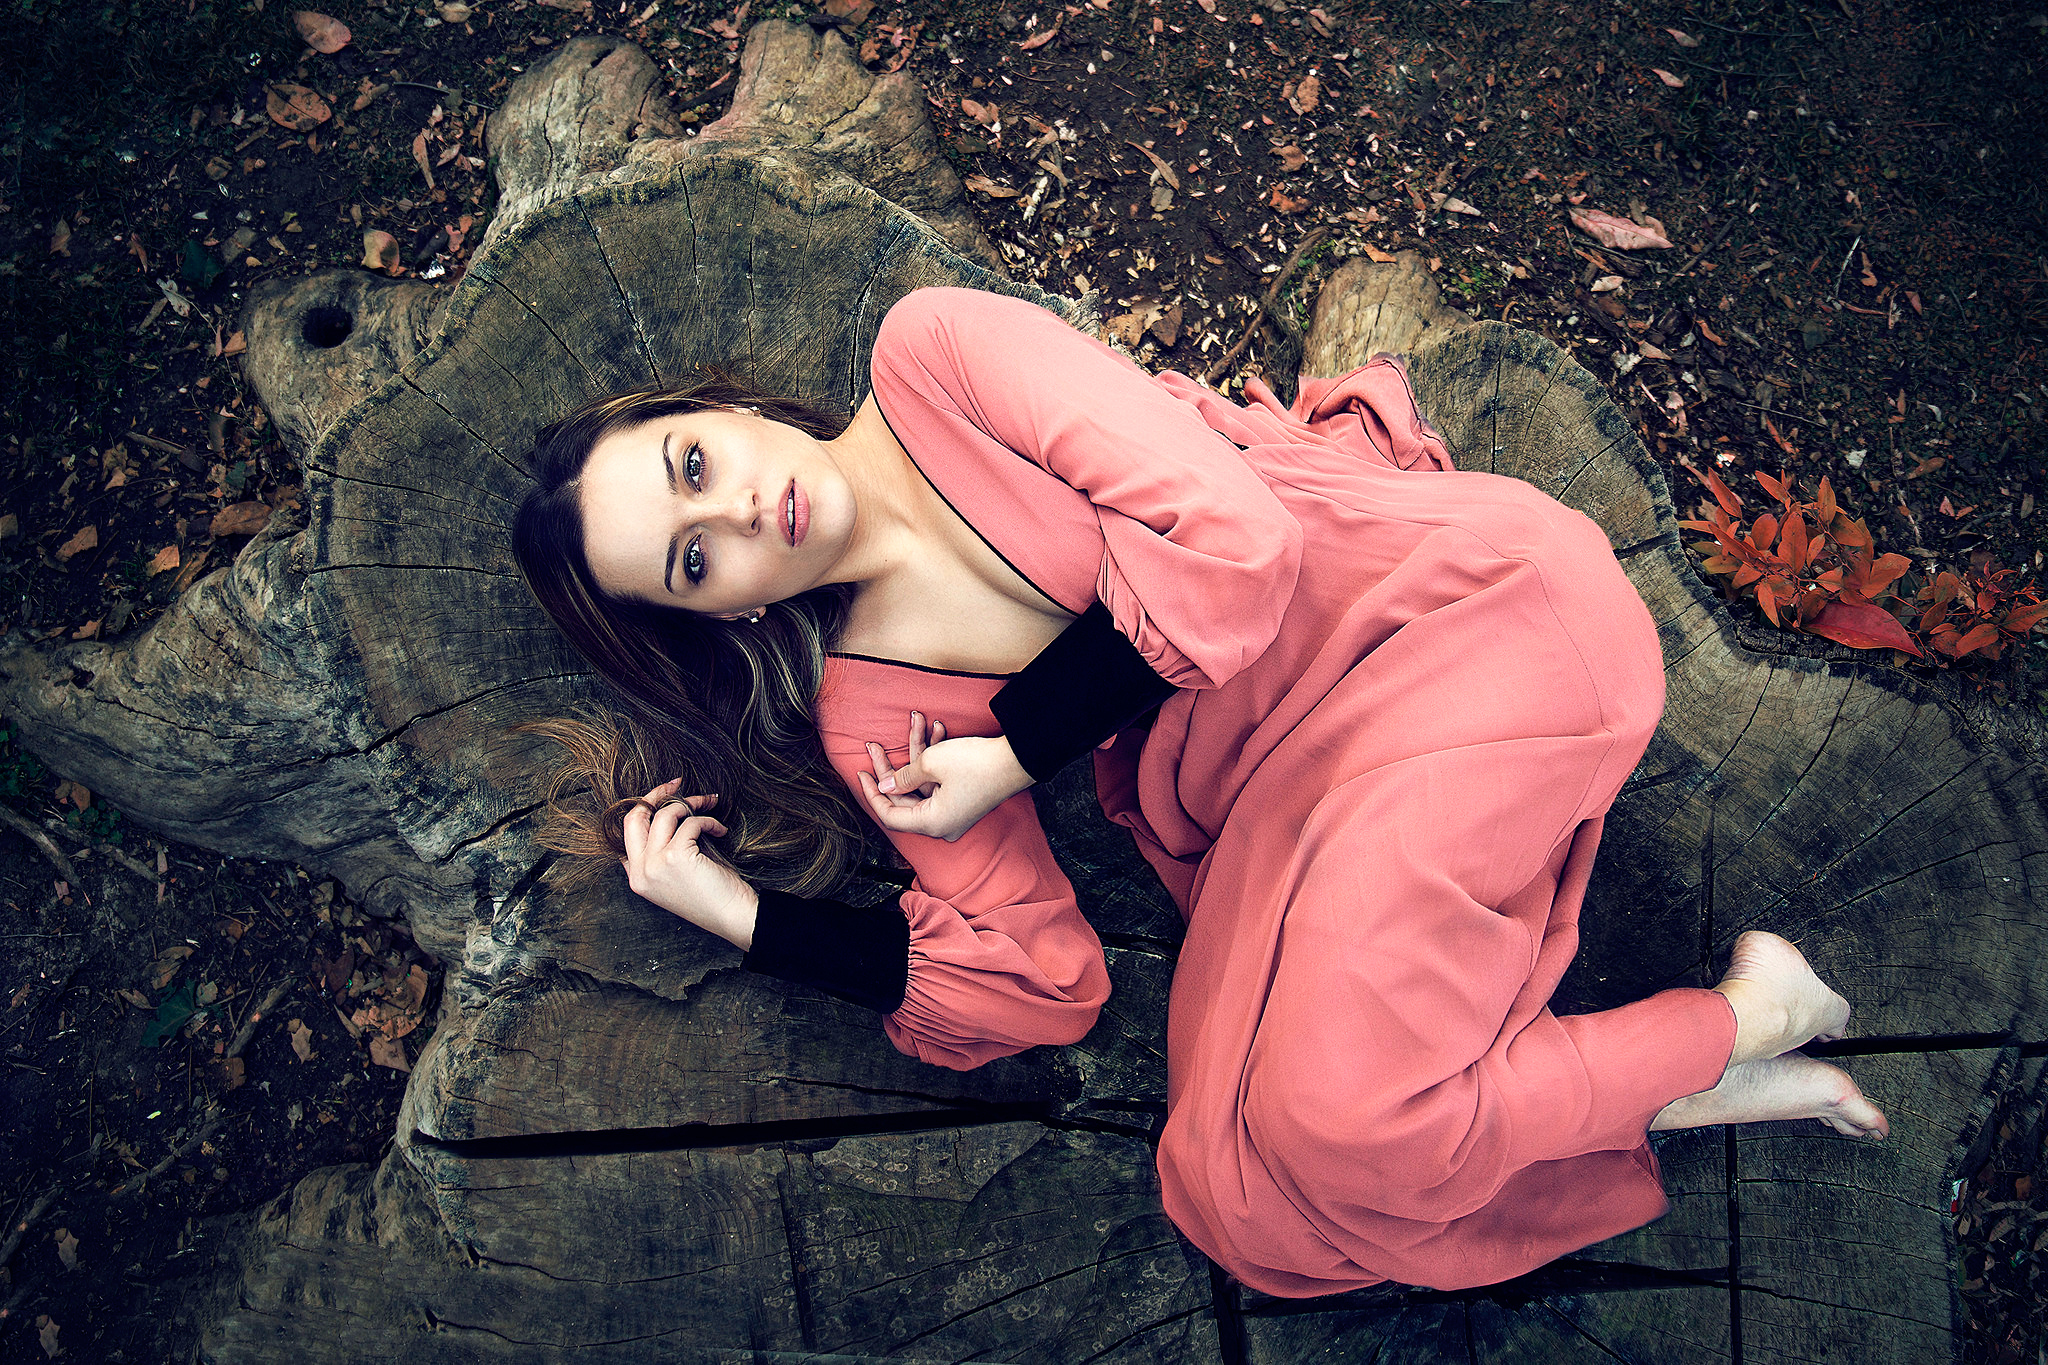 women, mood, brunette, lying down, model, outdoor, pink dress, stump